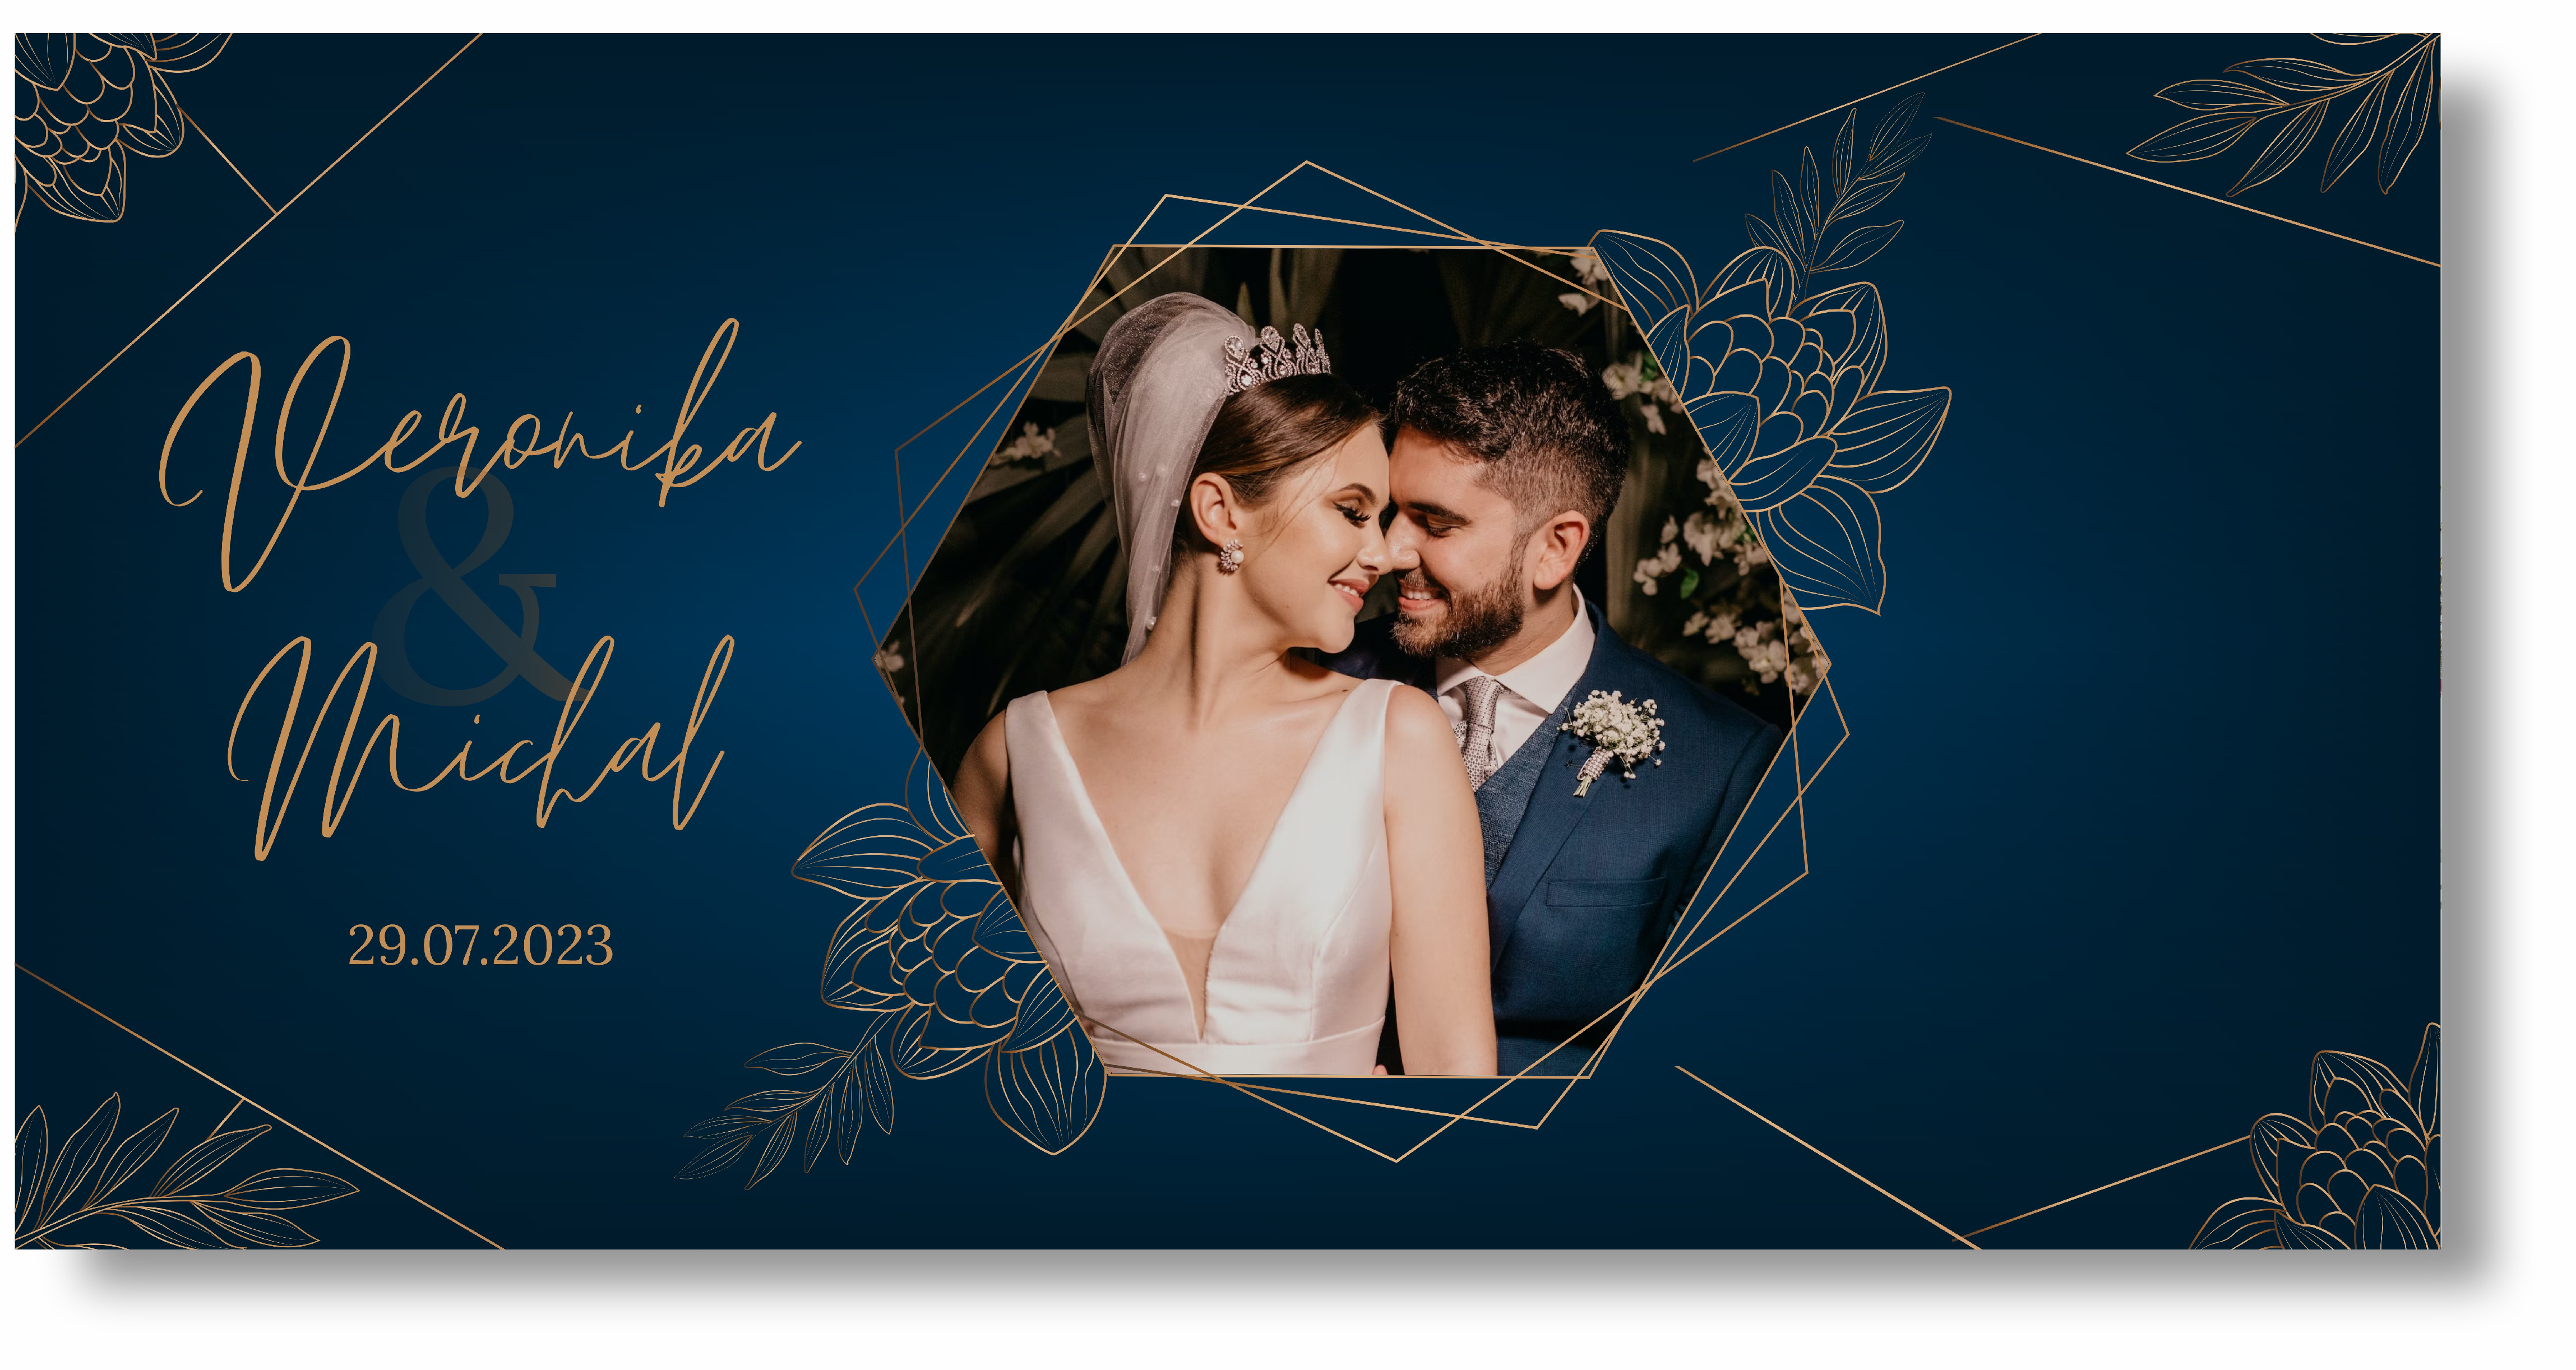 Personal Svatební banner s fotkou - Gold blue Rozmer banner: 130 x 260 cm